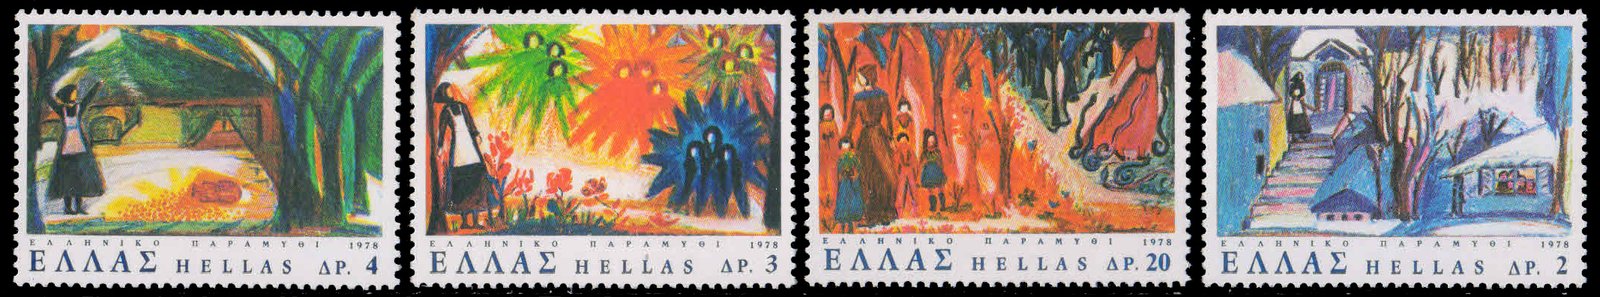 GREECE 1978-The Twelve Months, Greek Fairy Tale, Set of 4, MNH, S.G. 1429-1432